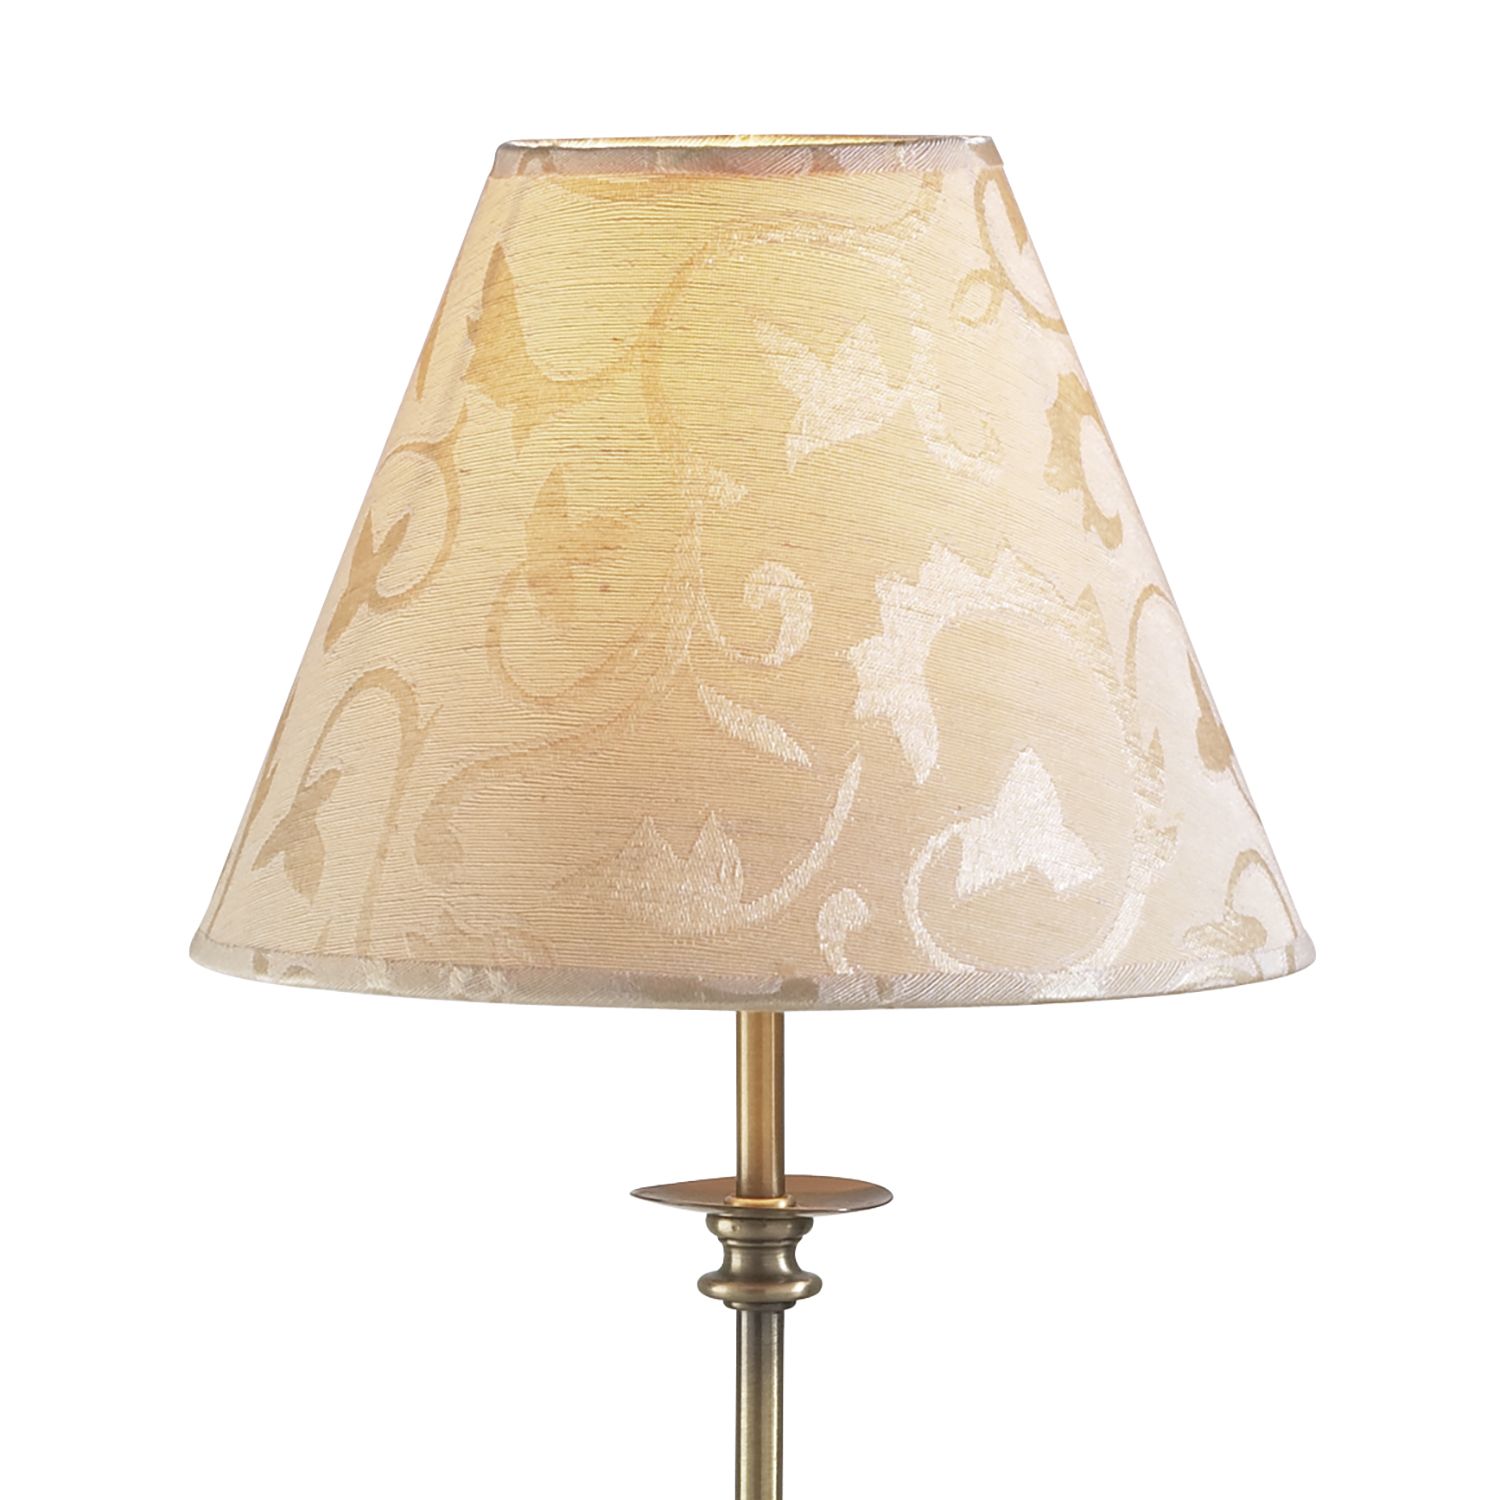 Blenheim Table Lamp Antique Brass, Cream Table Lamp Shades Uk